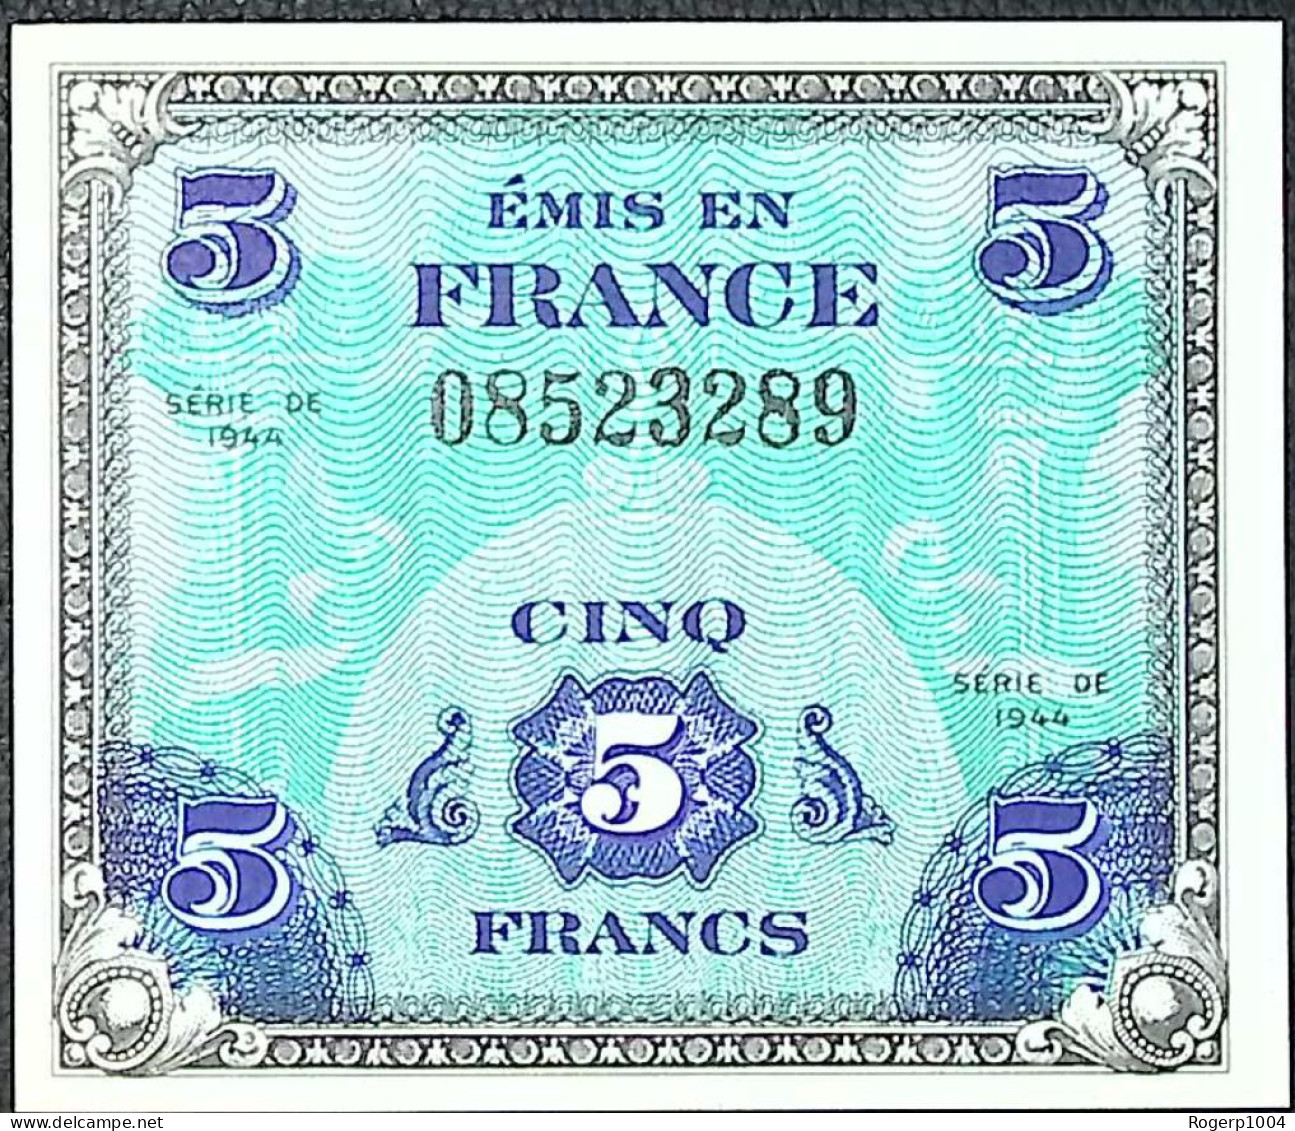 FRANCE * Billets Du Trésor * 5 Francs Drapeau * 1944 * Sans Série * Etat/Grade NEUF/UNC - 1944 Vlag/Frankrijk